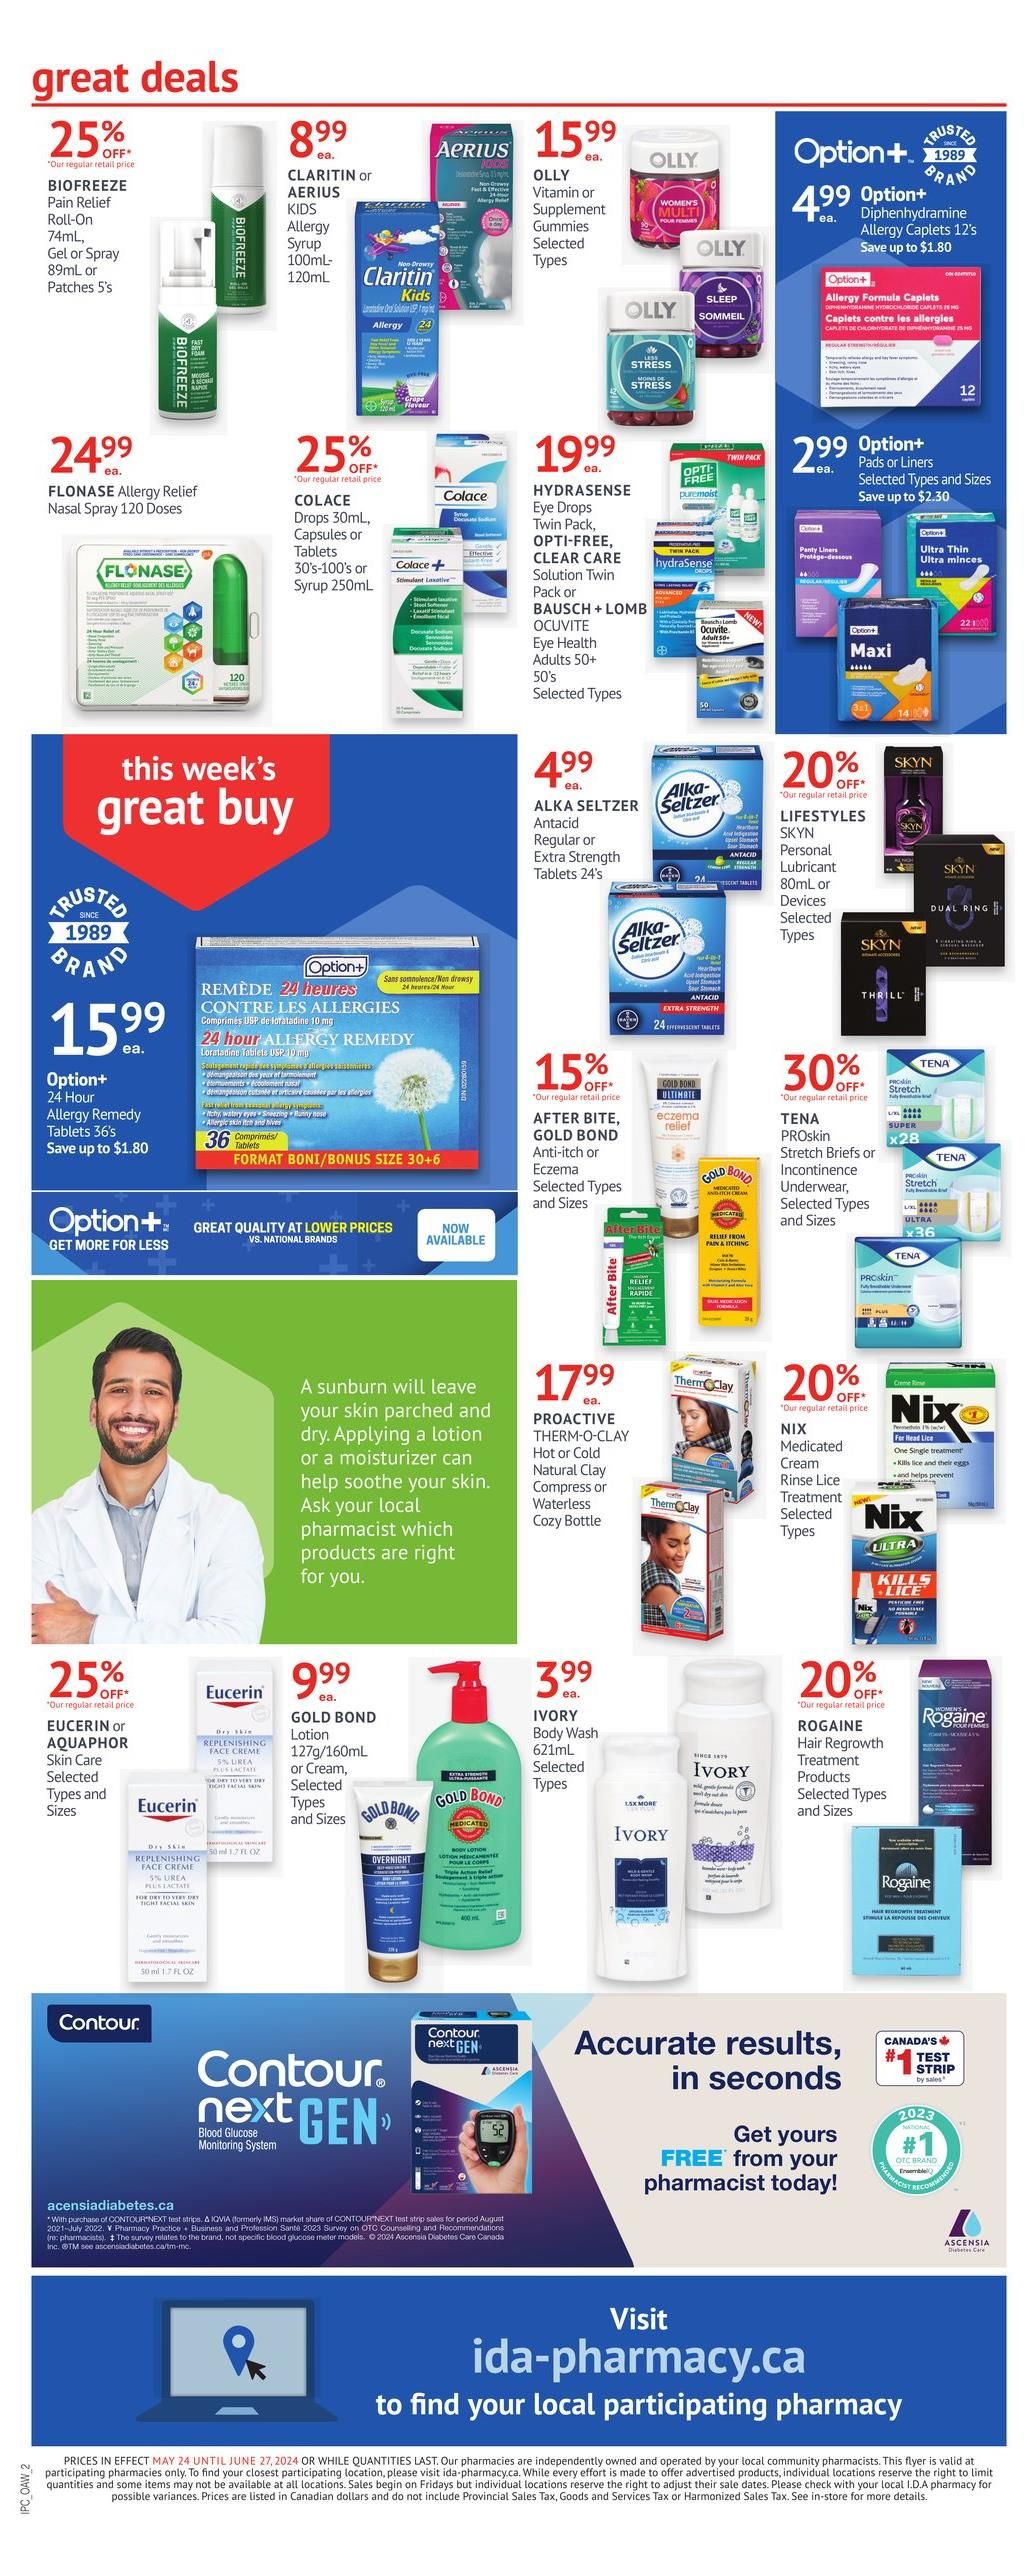 Guardian IDA Pharmacies - Monthly Savings - Page 2